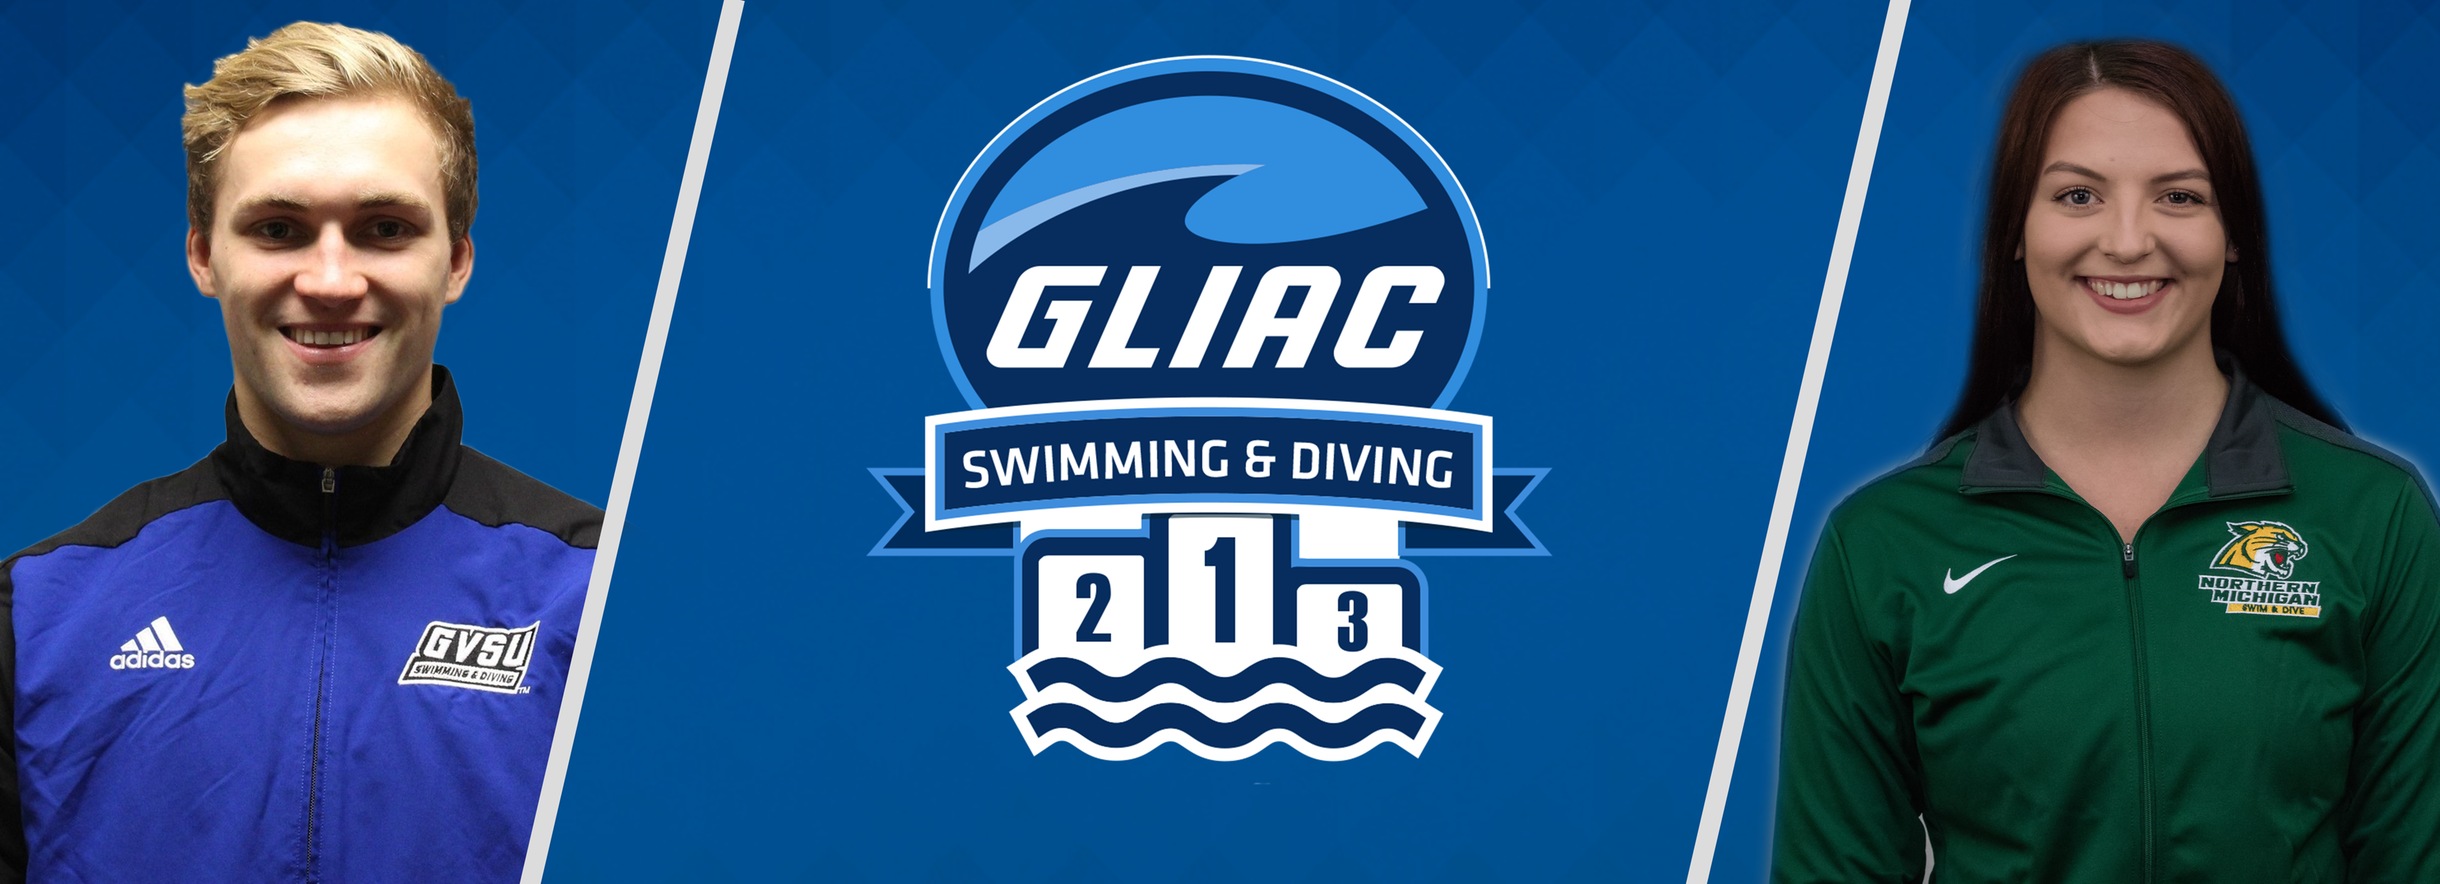 GVSU's Shalamon, NMU's Helm Claim GLIAC Swimming Weekly Honors